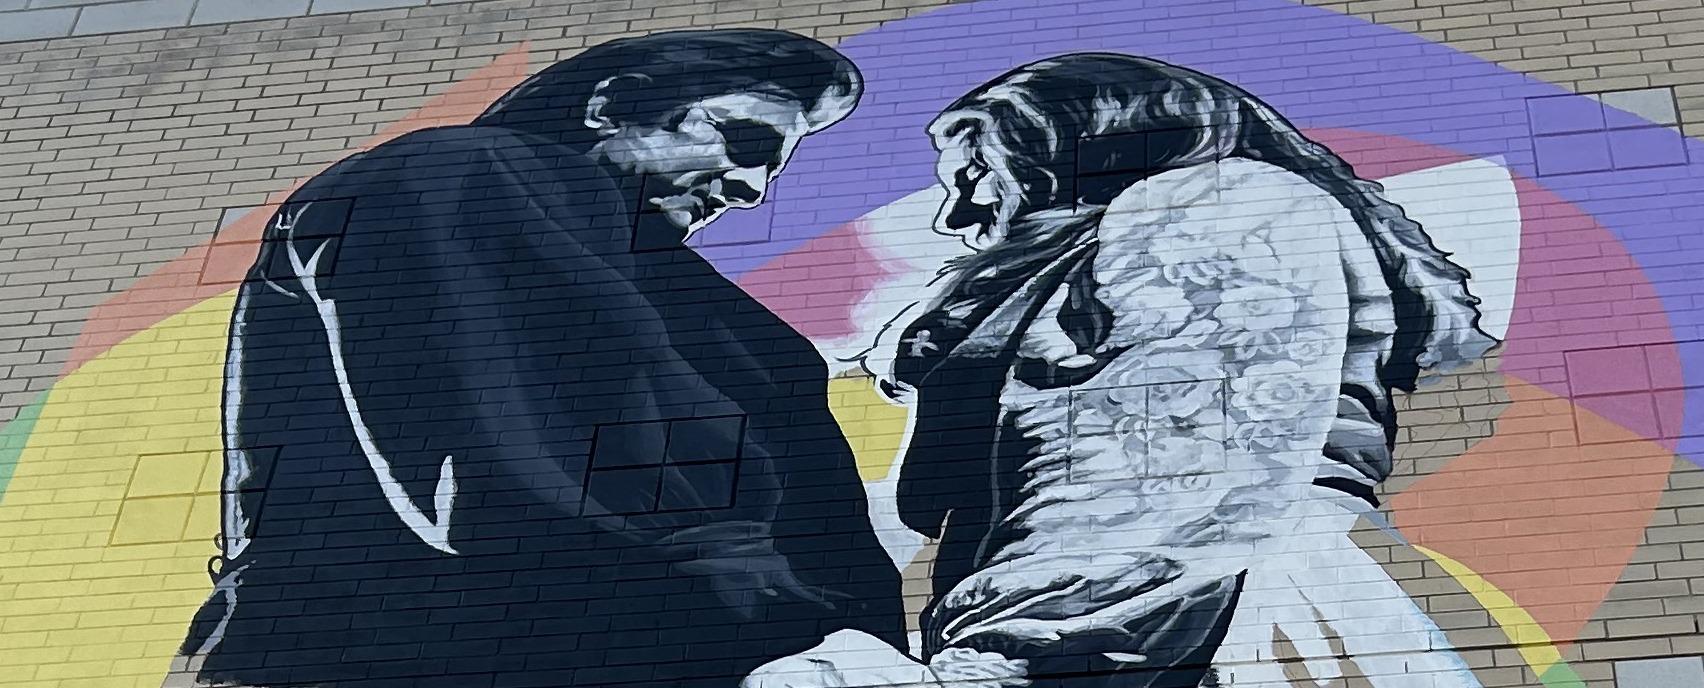 Johnny Cash & June Carter mural at Budweiser Gardens located in London, Ontario.